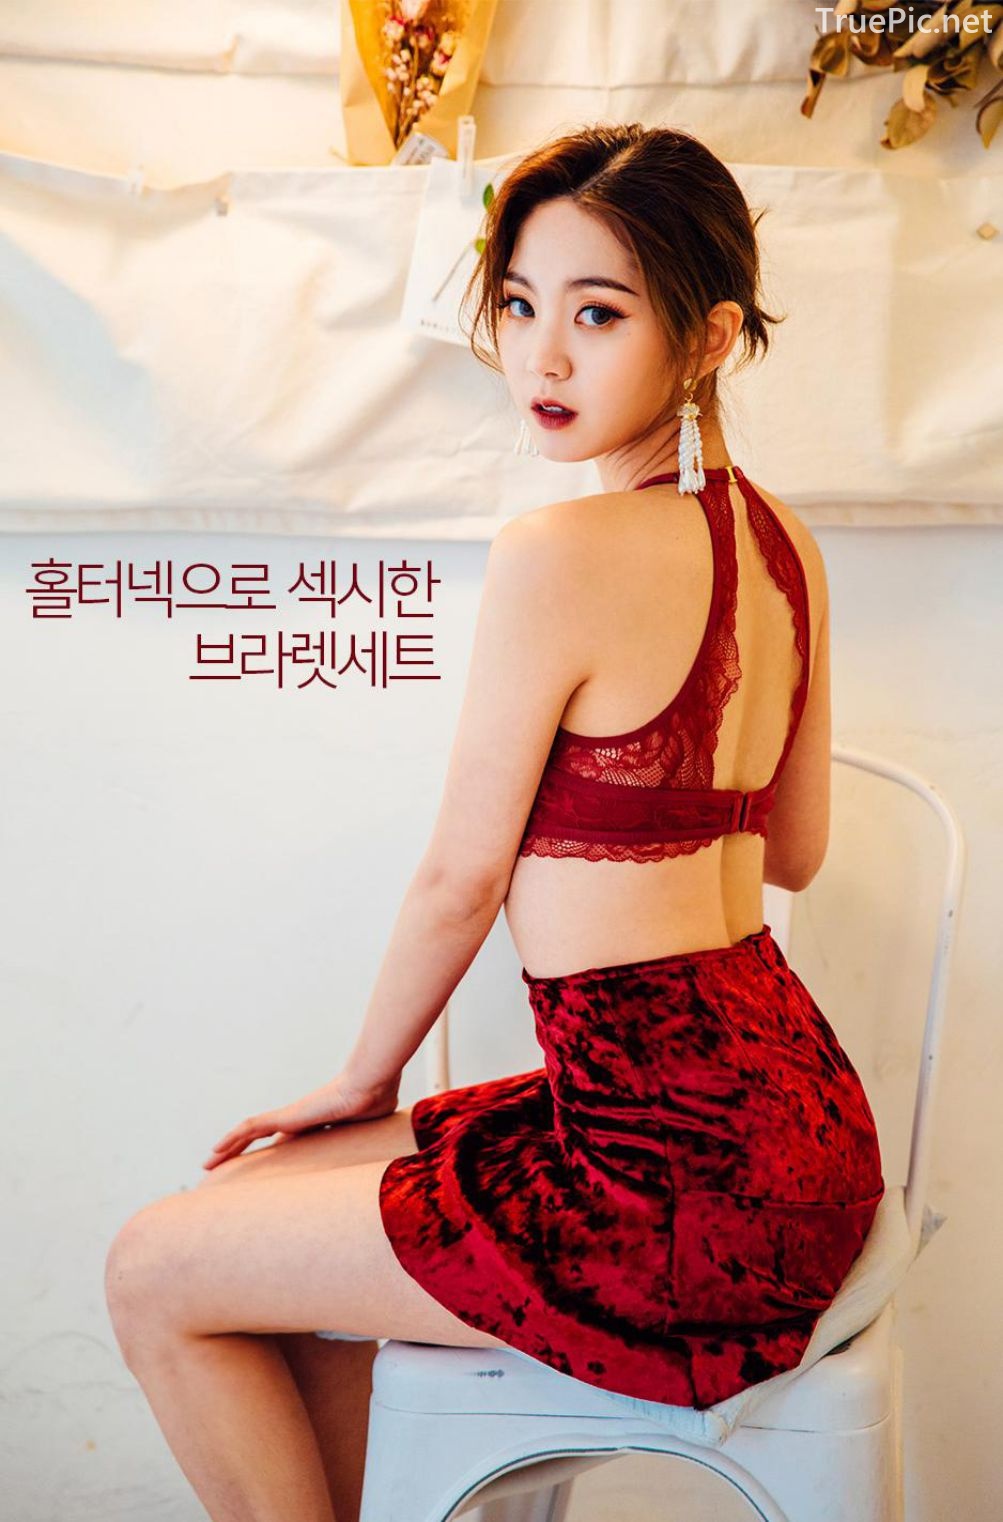 Korean Lingerie Queen - Lee Chae Eun - Red and Black Rabbit Lingerie - TruePic.net - Picture 17